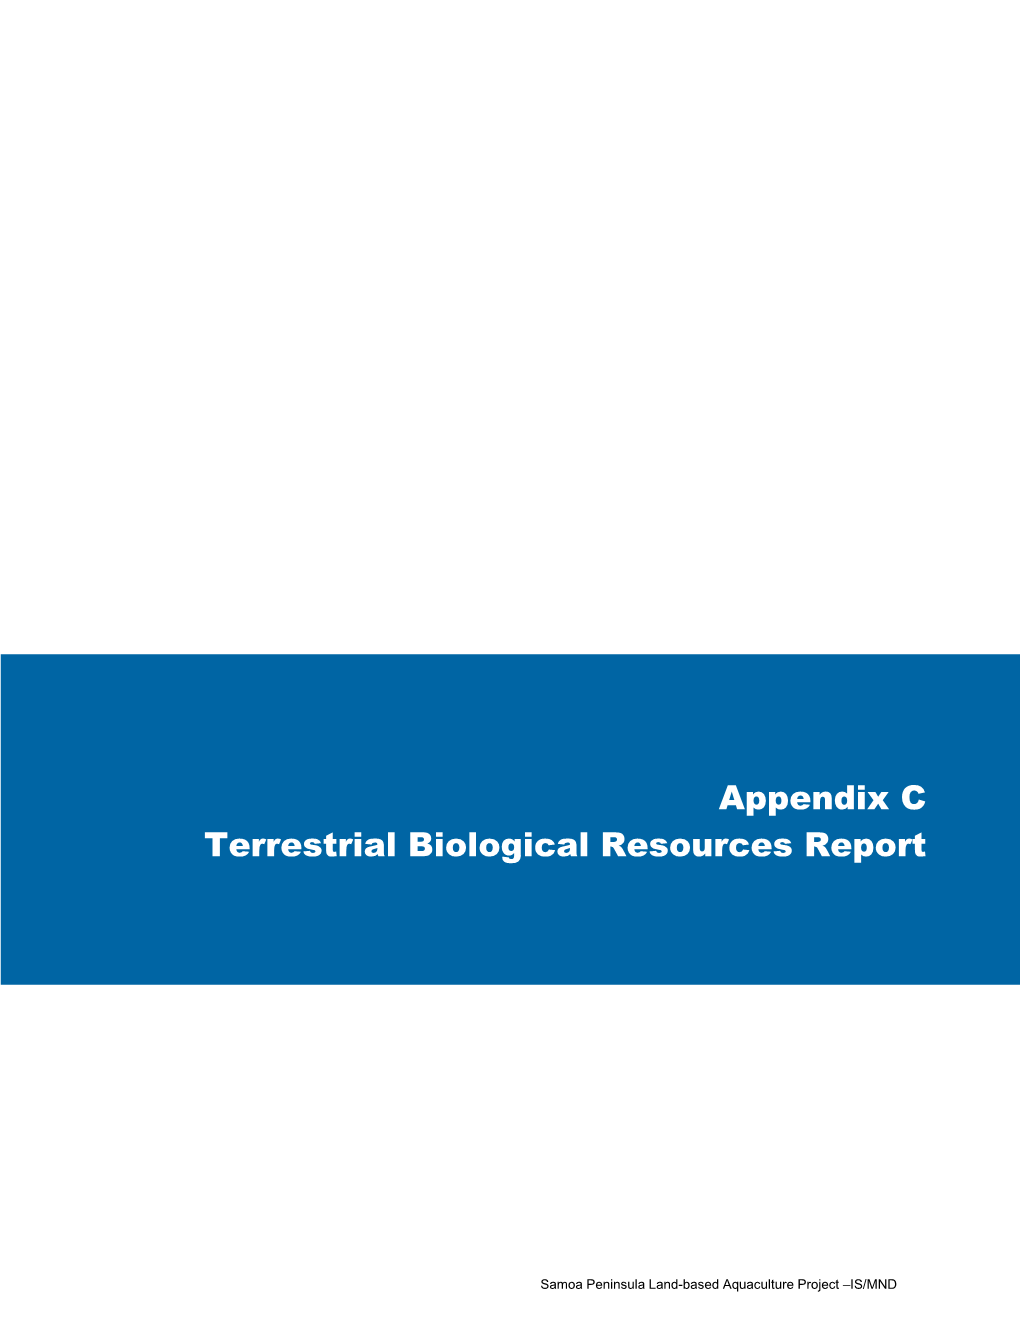 Appendix C Terrestrial Biological Resources Report